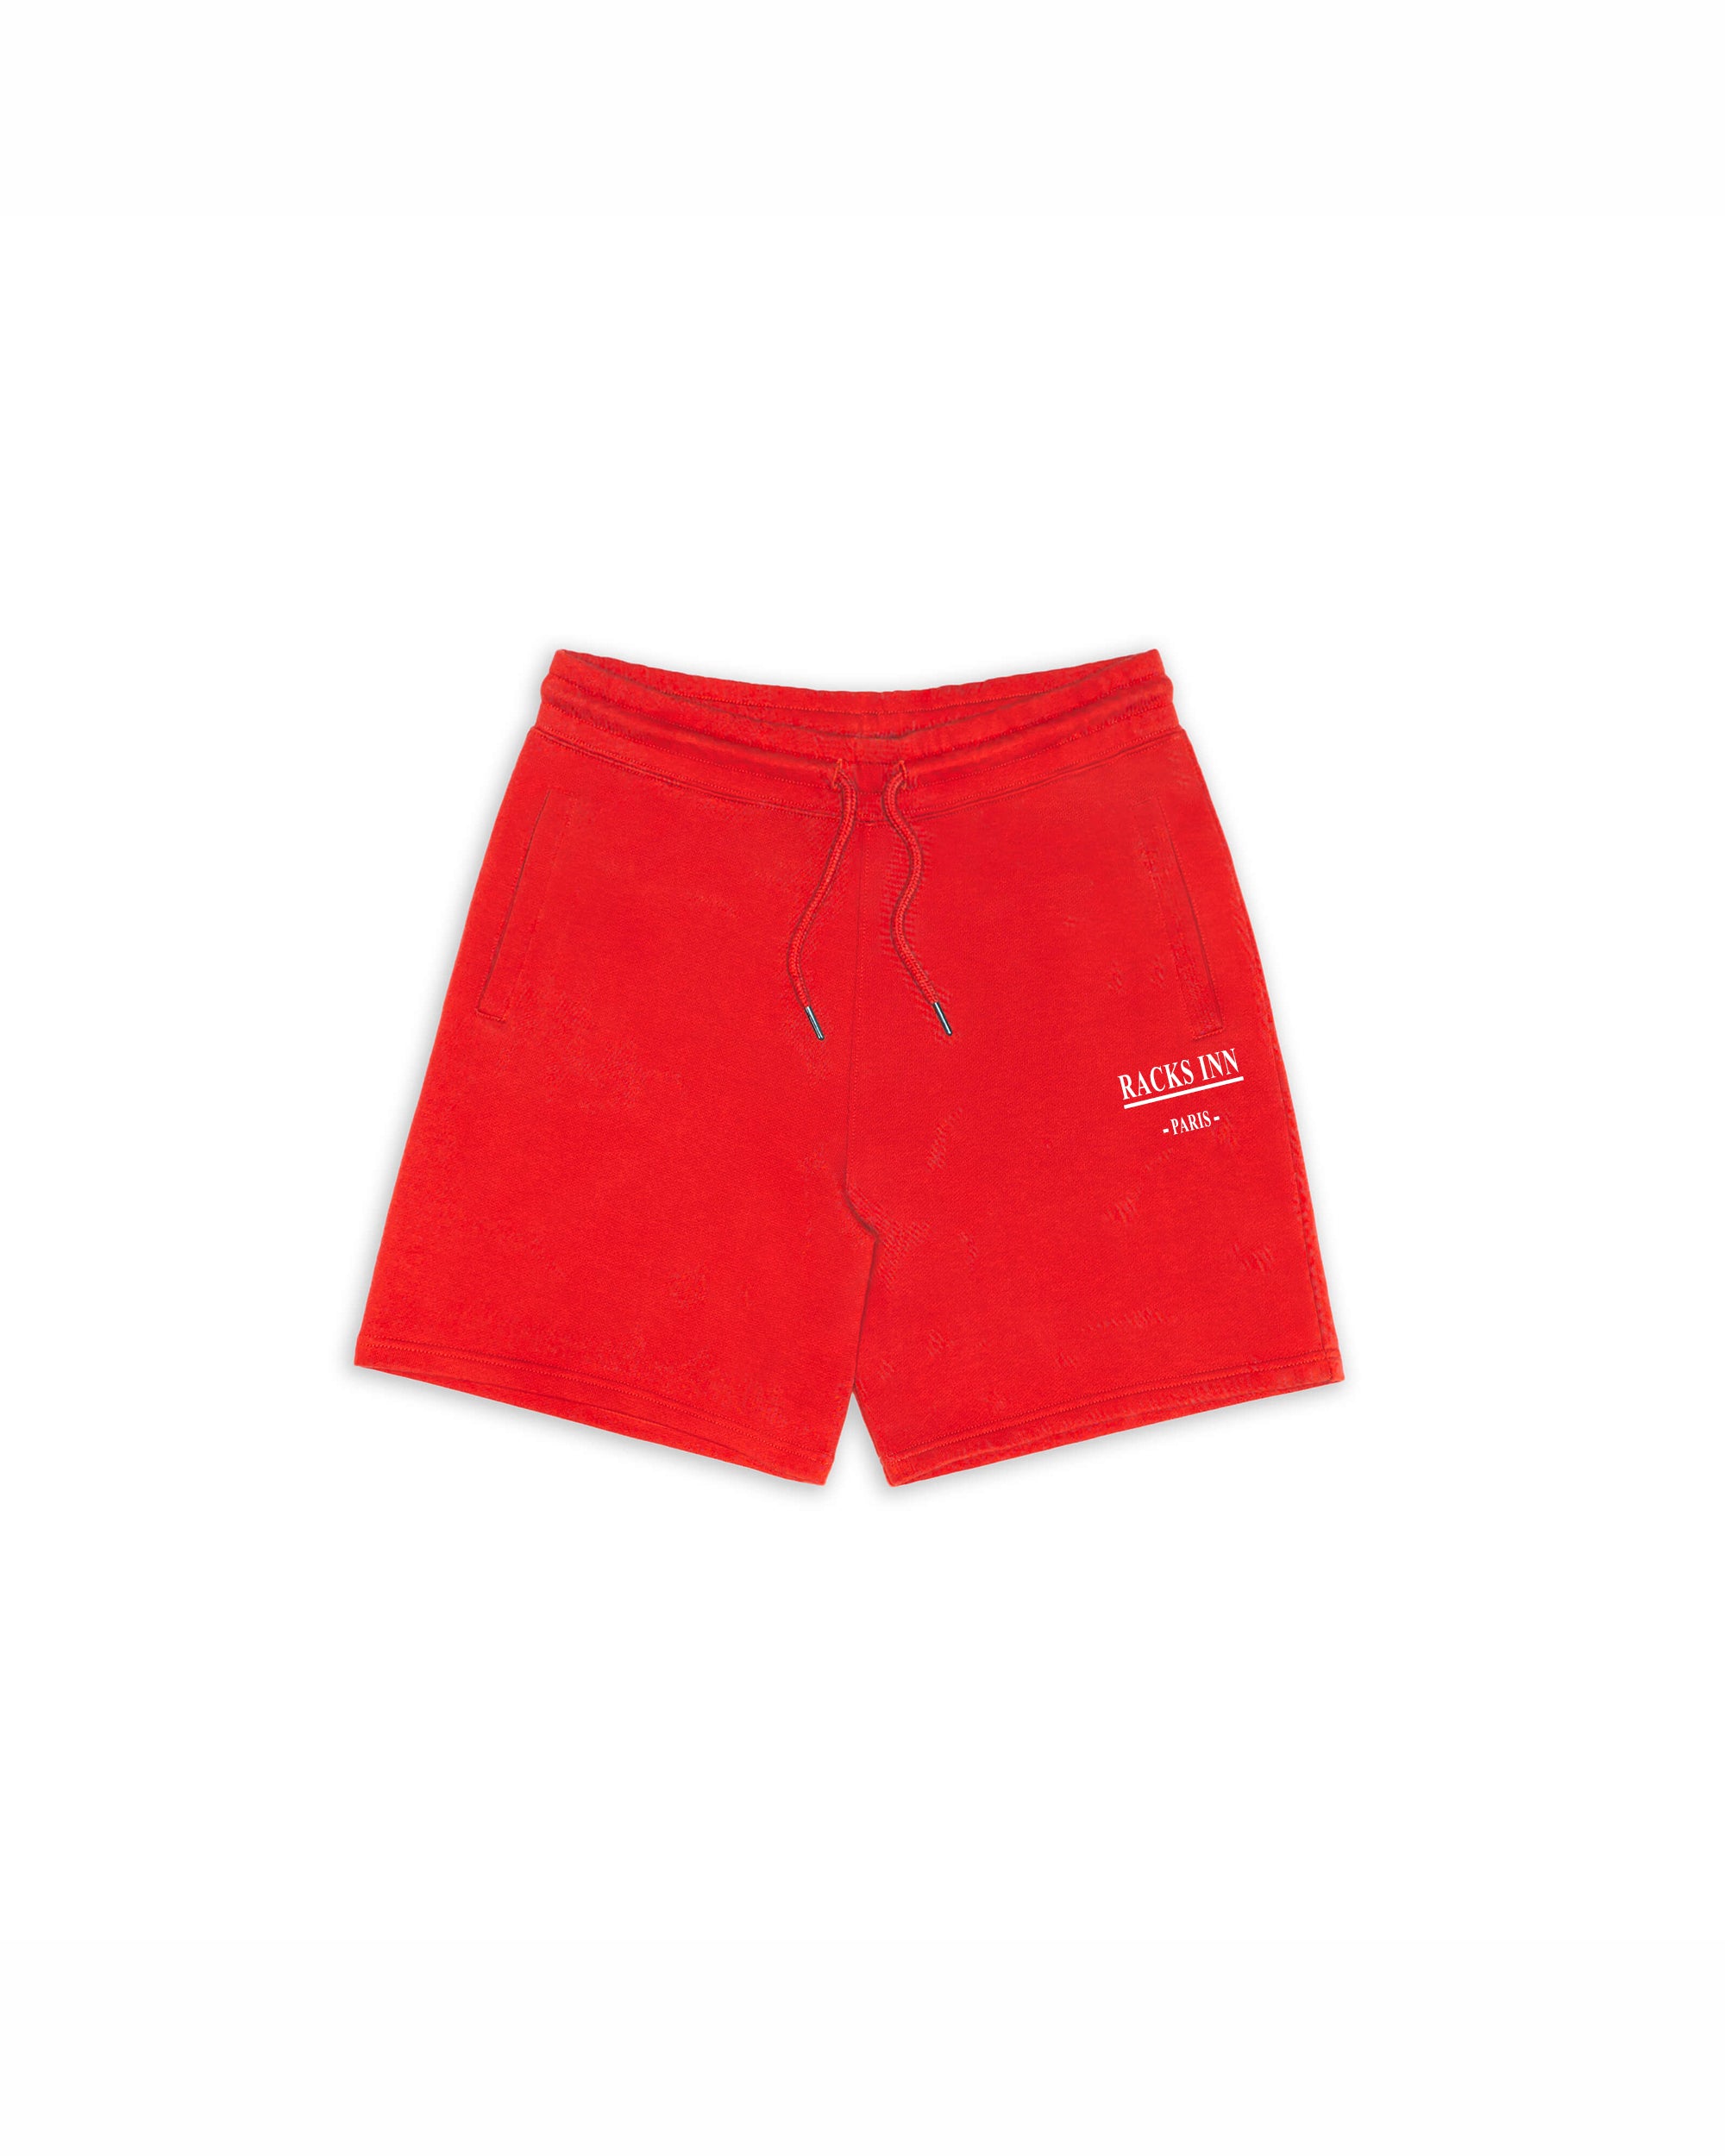 Paris Shorts - Red